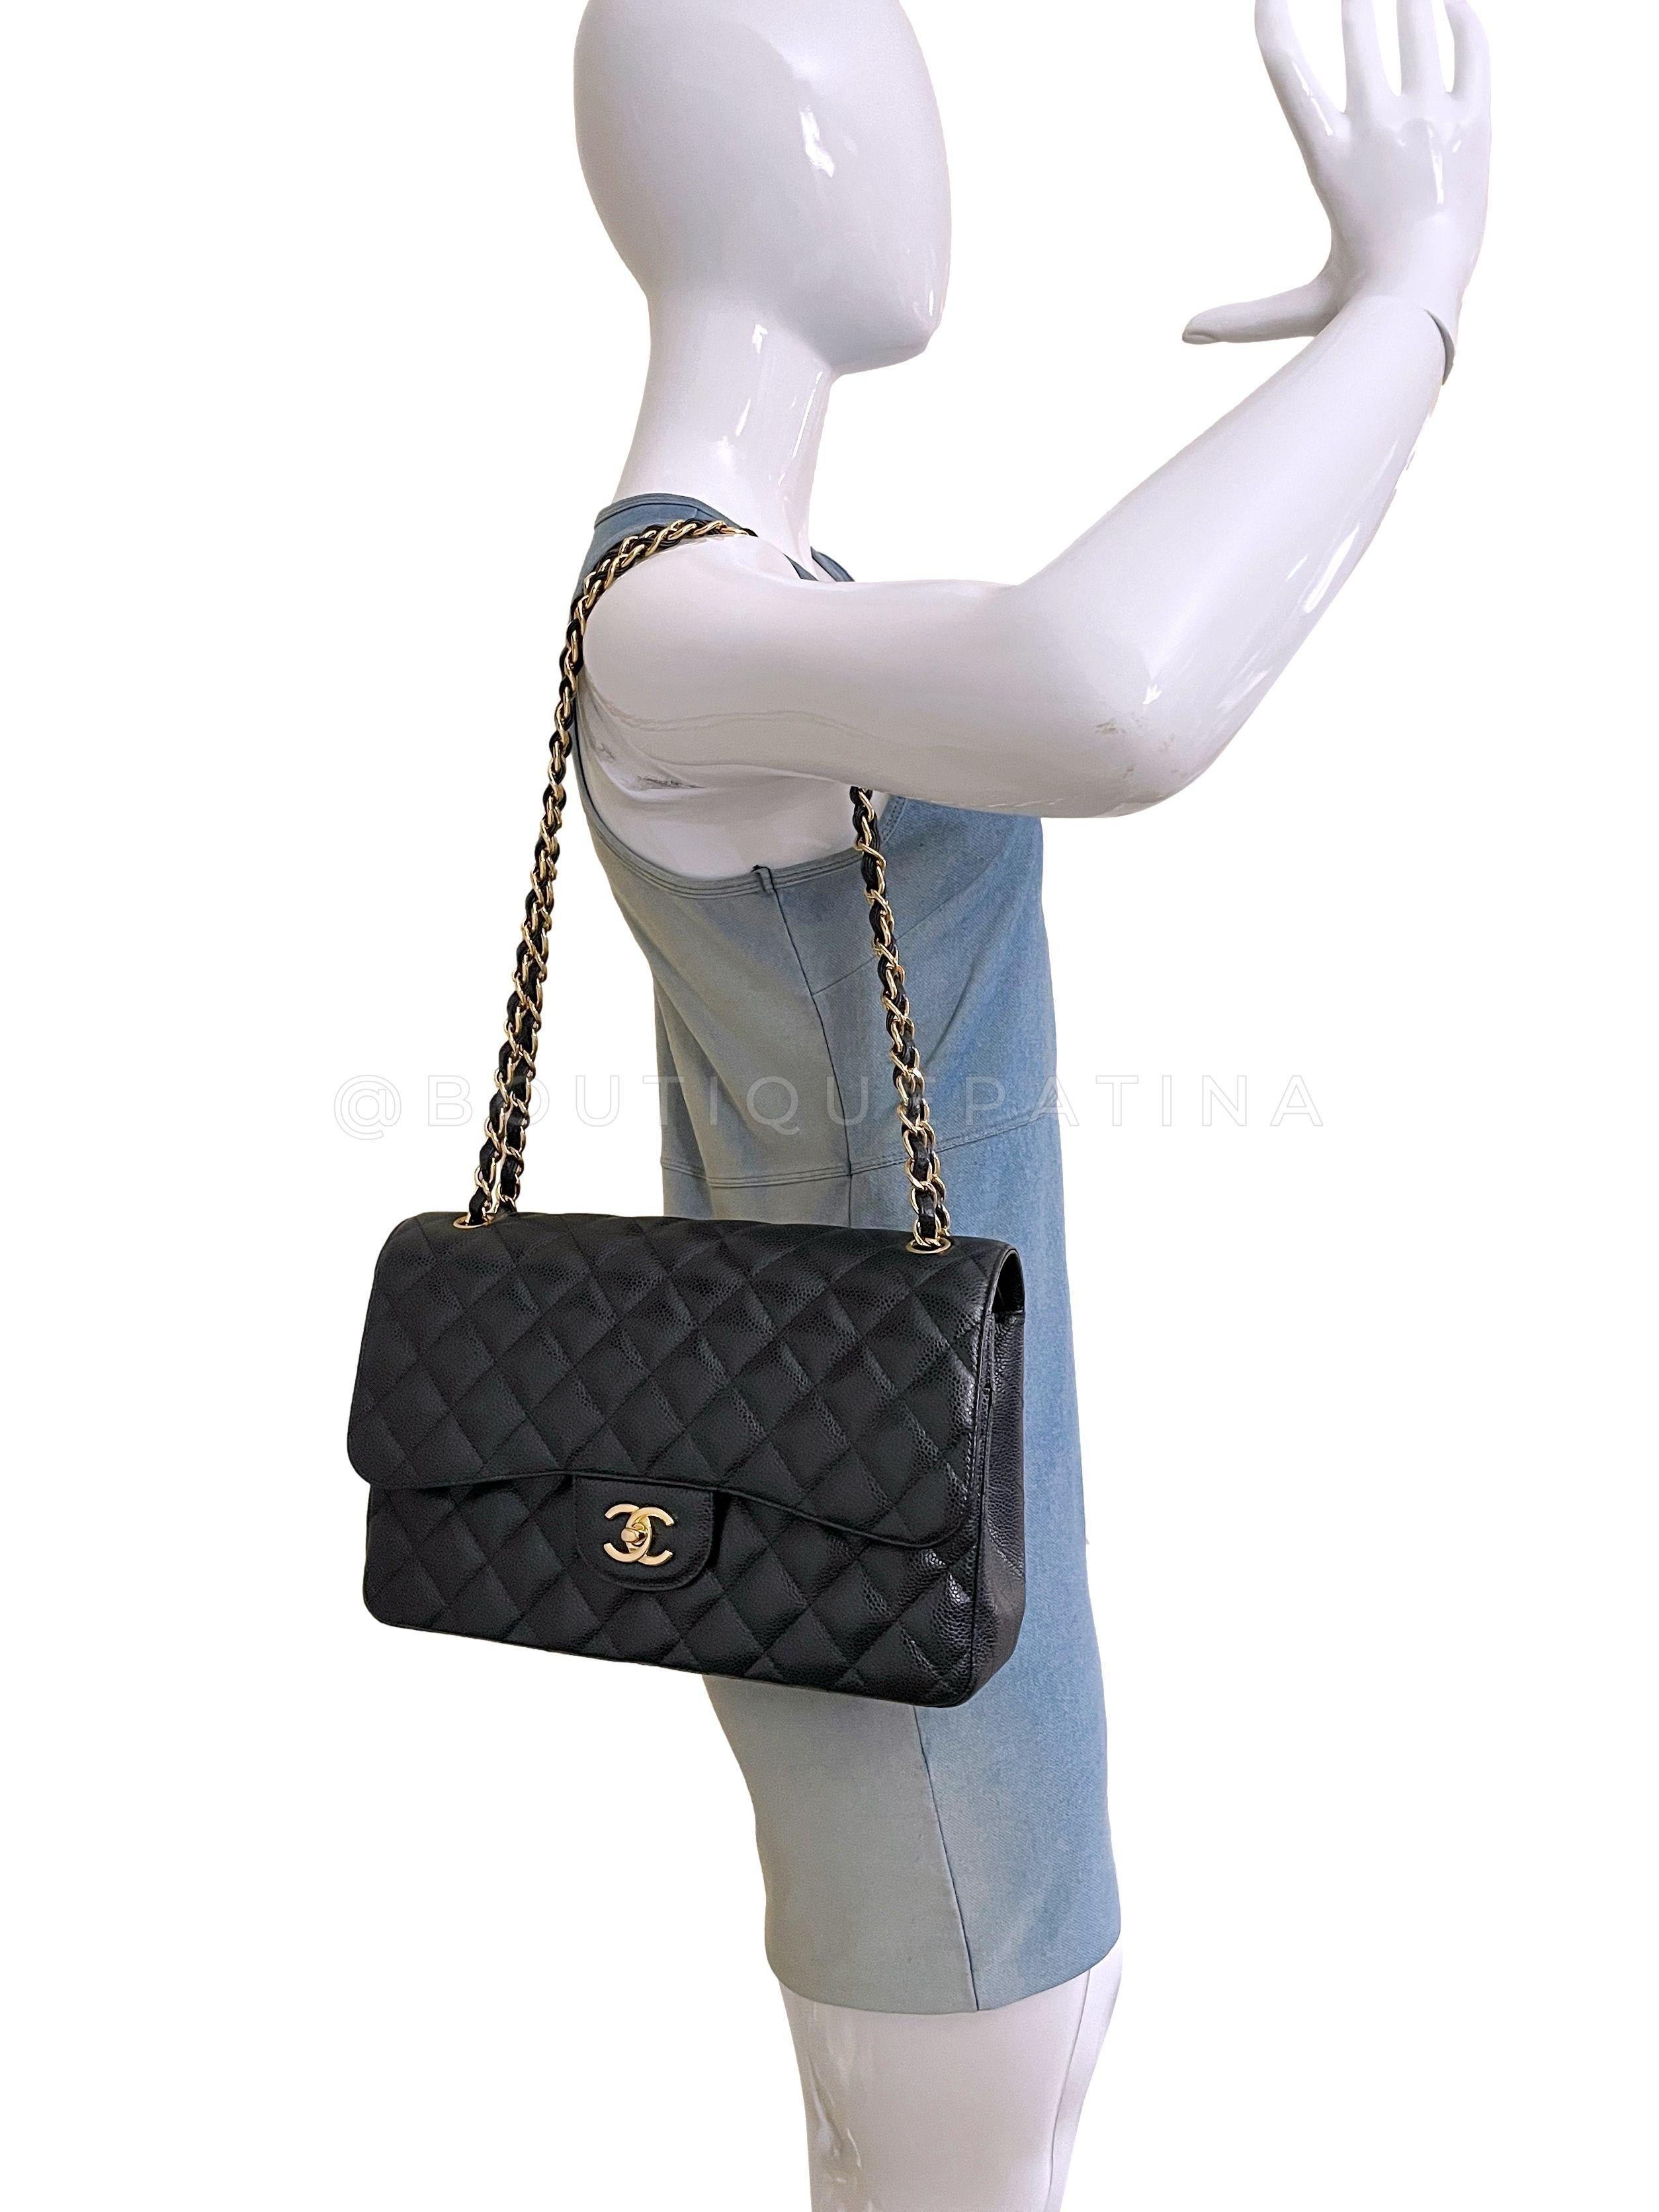 Chanel Black Caviar Jumbo Classic Double Flap Bag GHW 65399 For Sale 10